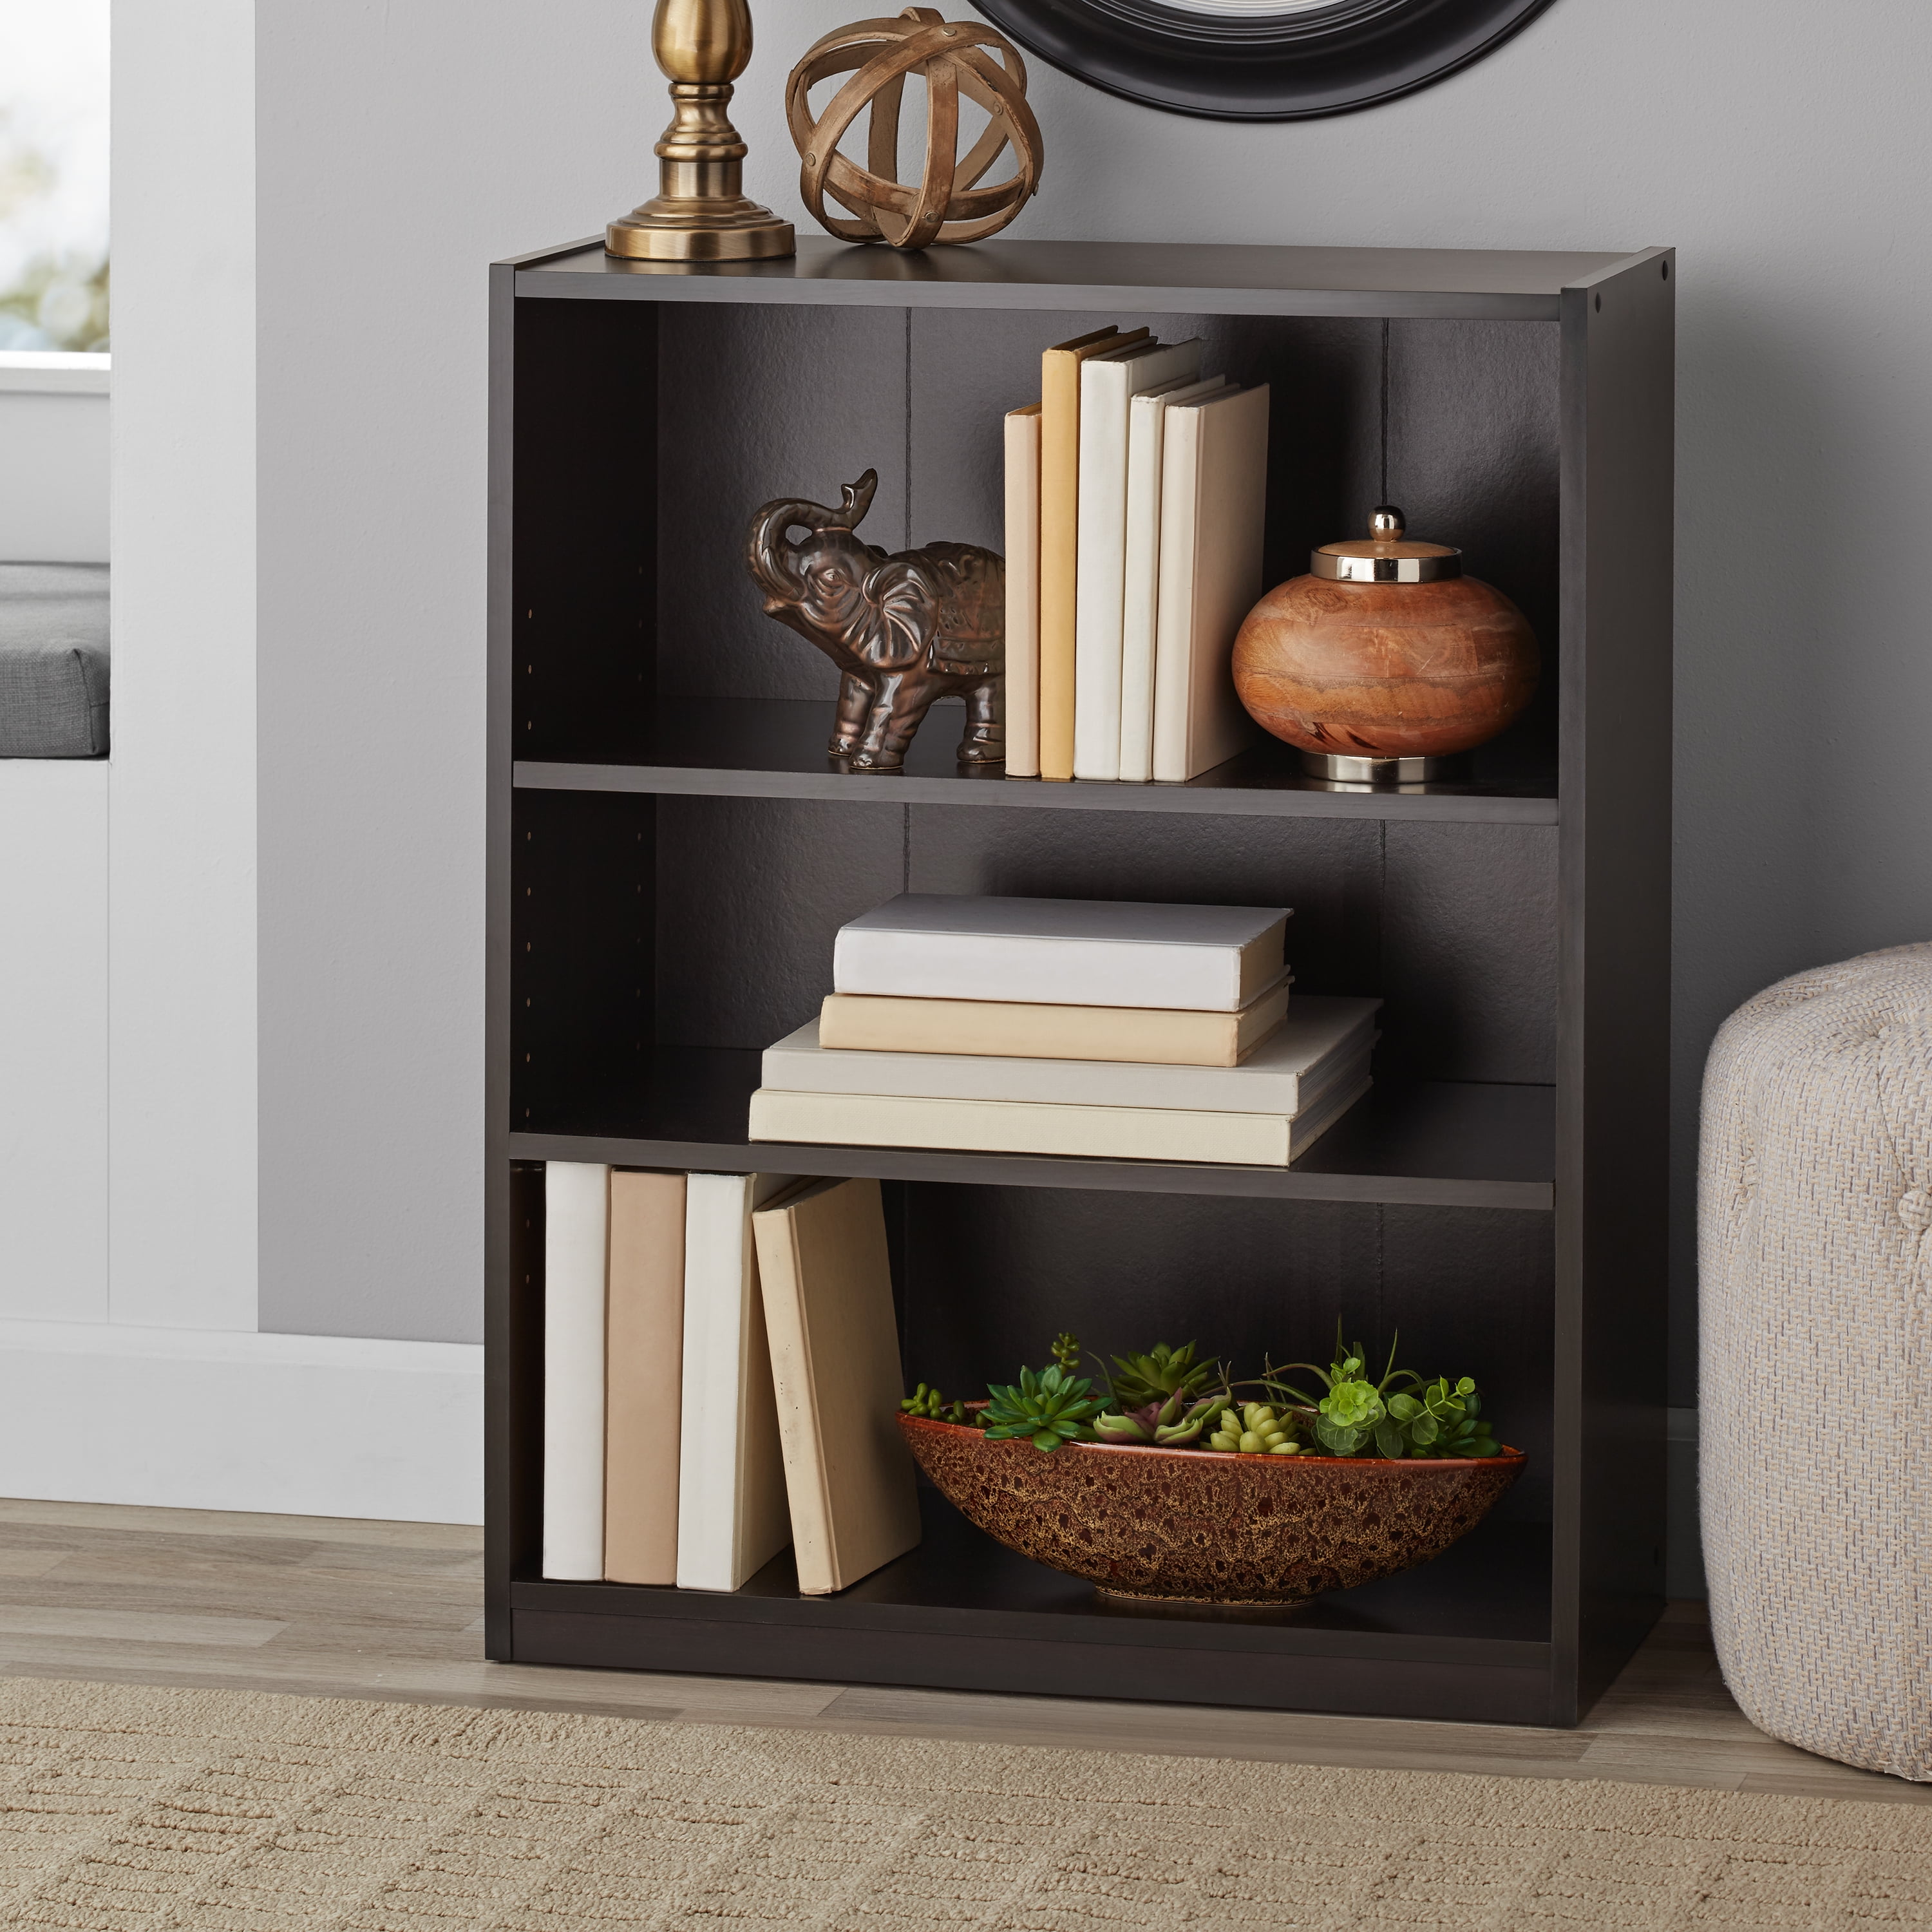 Two Adjustable Shelves Bookcase Home Storage Organizer Back Panel Soft White New